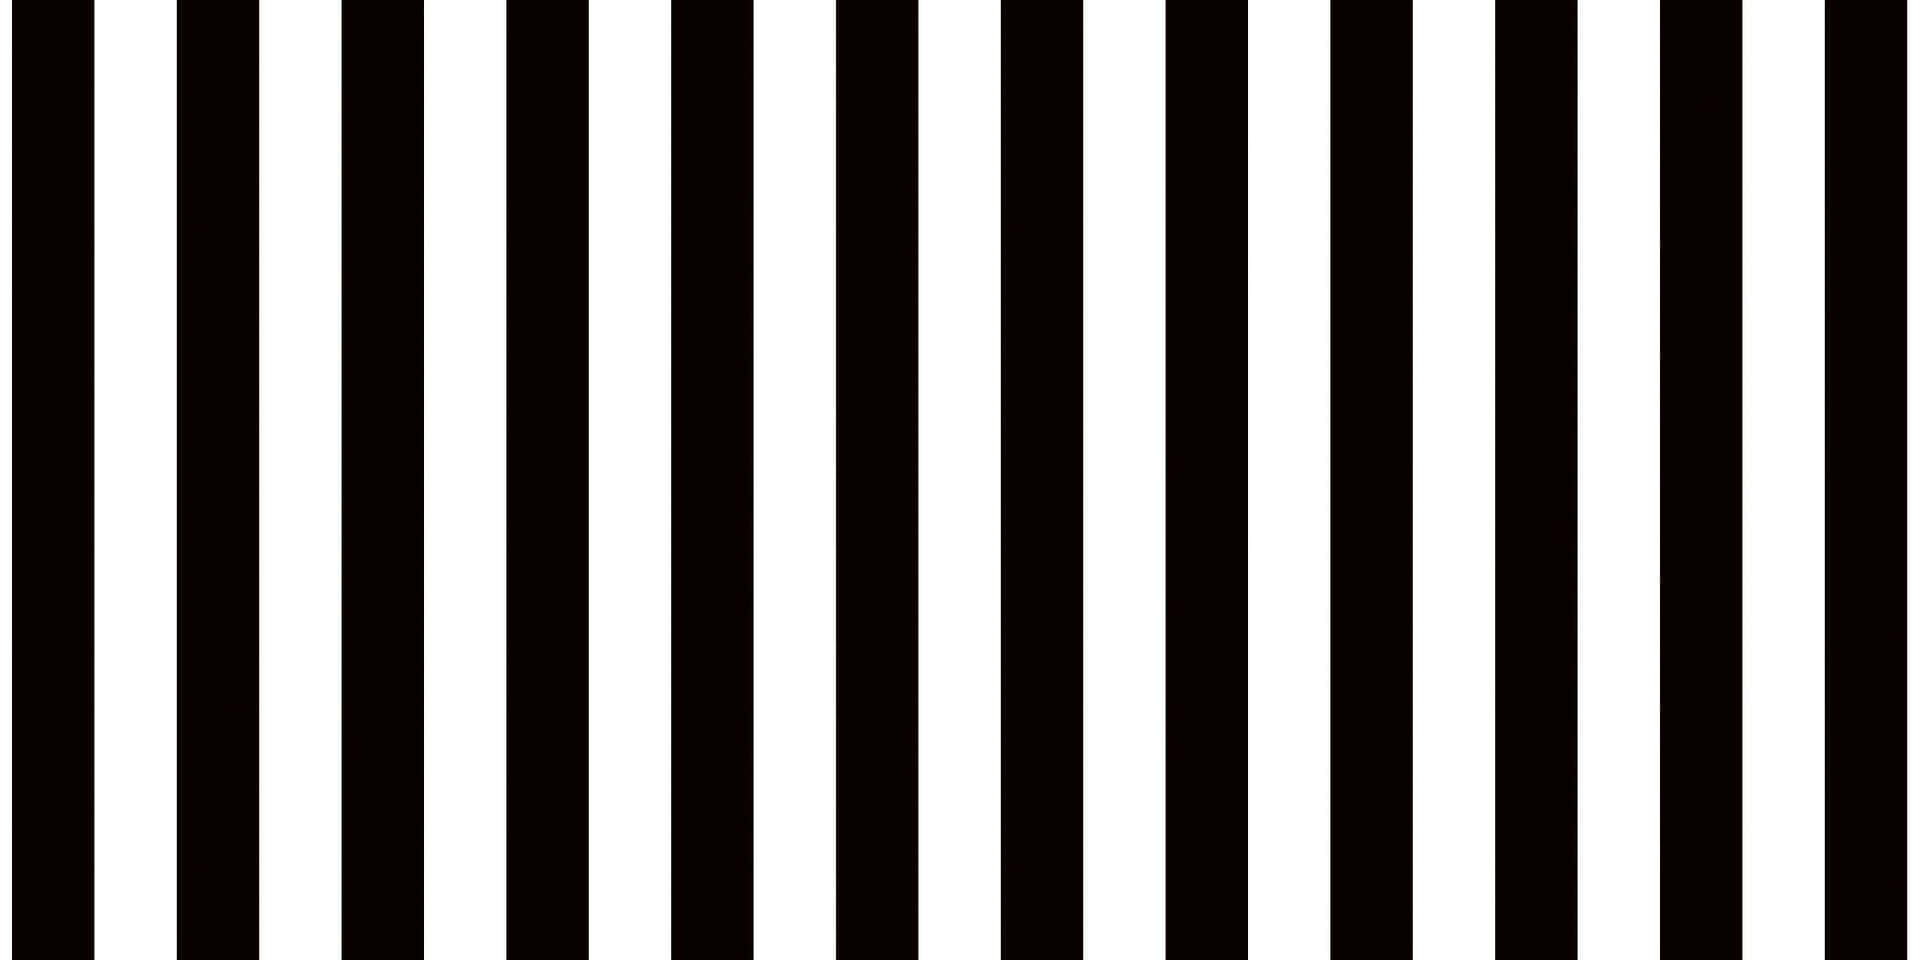 Stylish black and white striped background